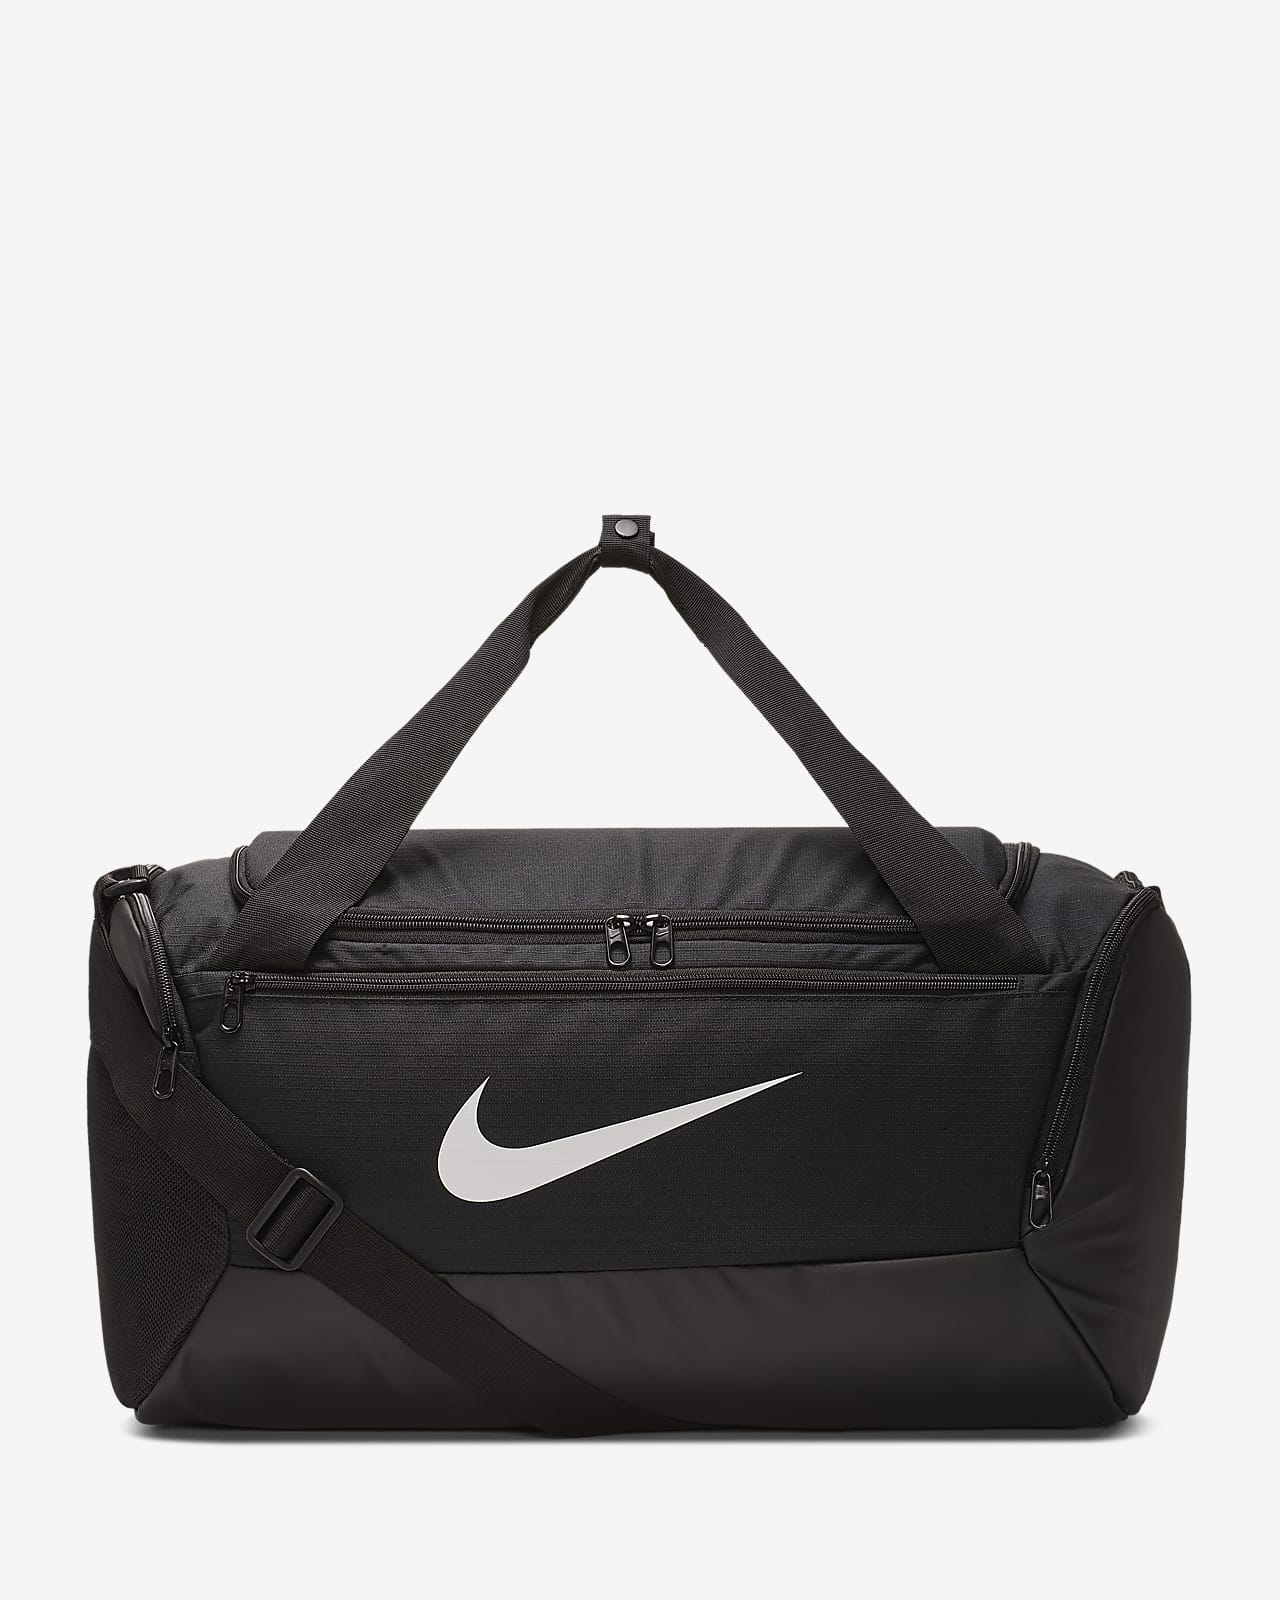 Nike Brasilia Duffle Bag -